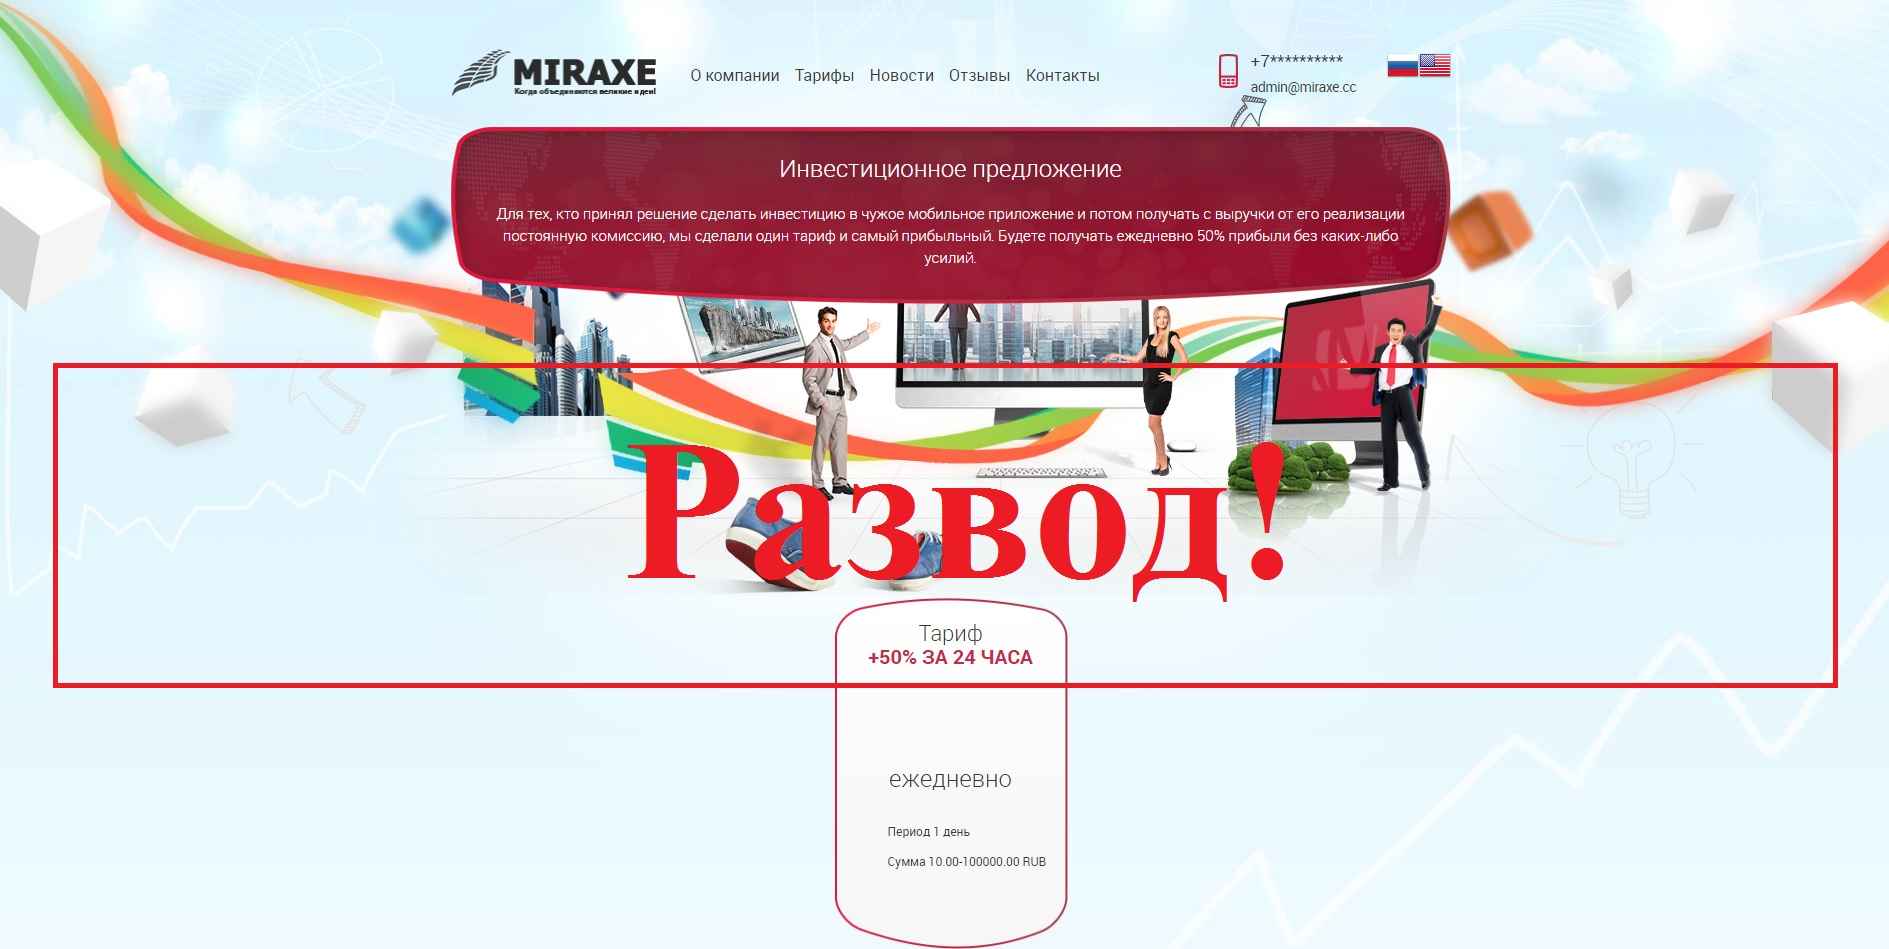 Miraxe – отзывы. Инвестиции в miraxe.cc